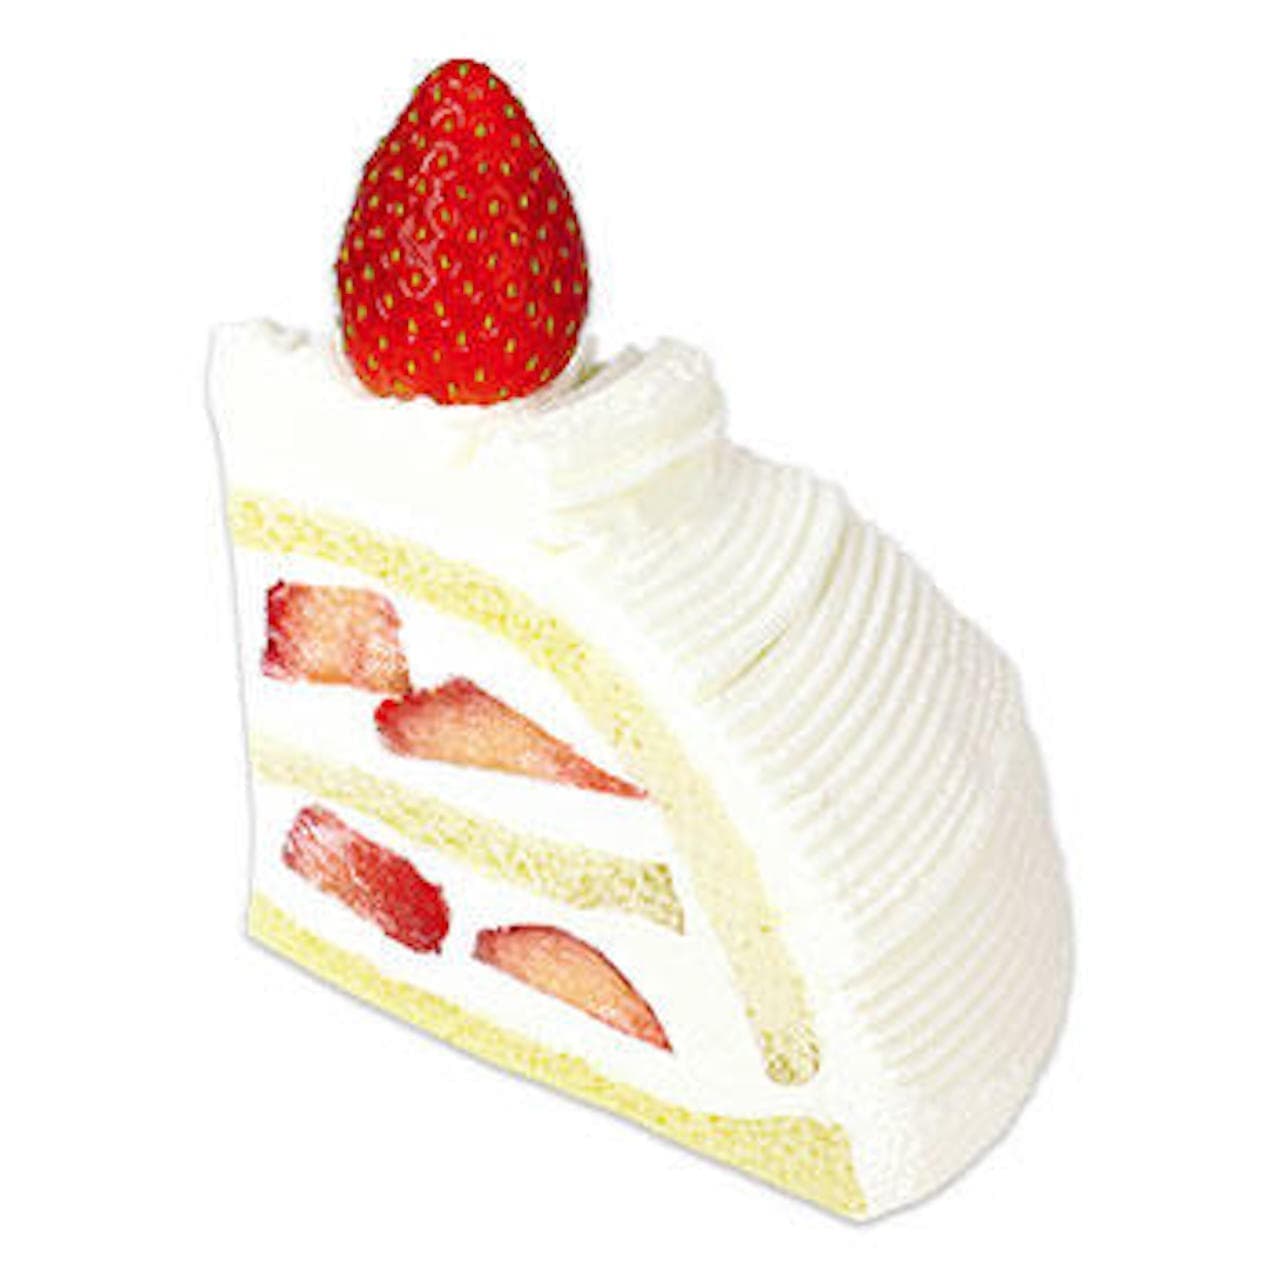 Fujiya "Italian Shortcake with Plenty of Strawberries"